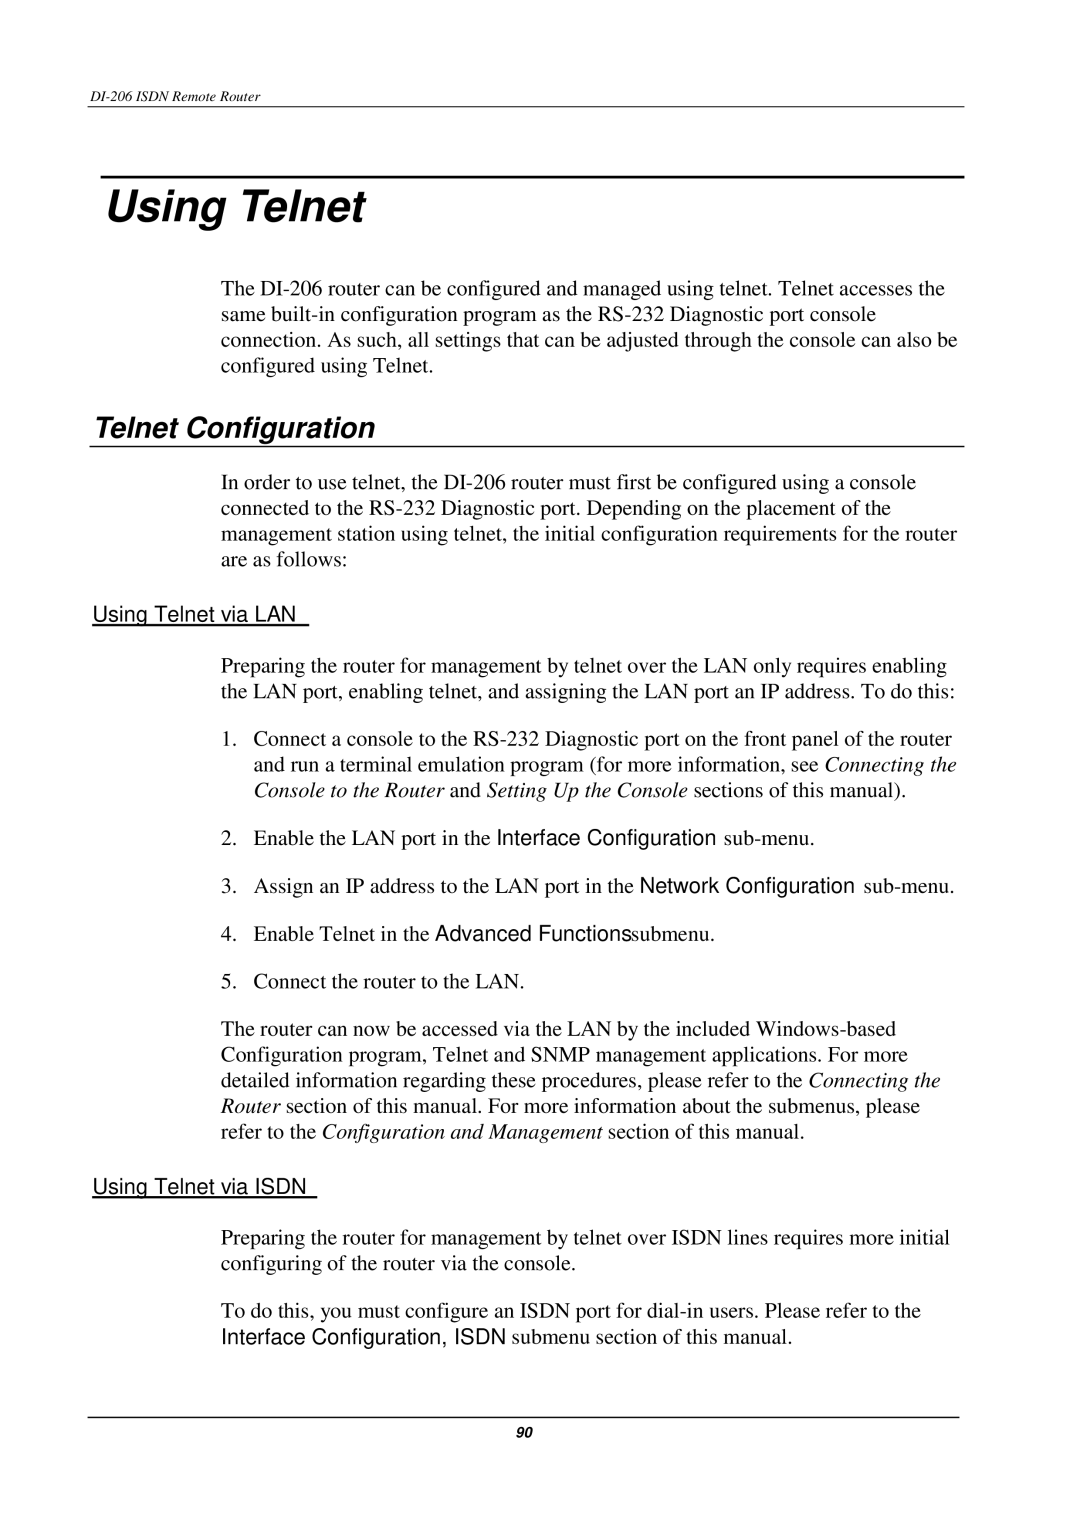 D-Link DI-206 manual Telnet Configuration, Using Telnet via LAN, Using Telnet via Isdn 